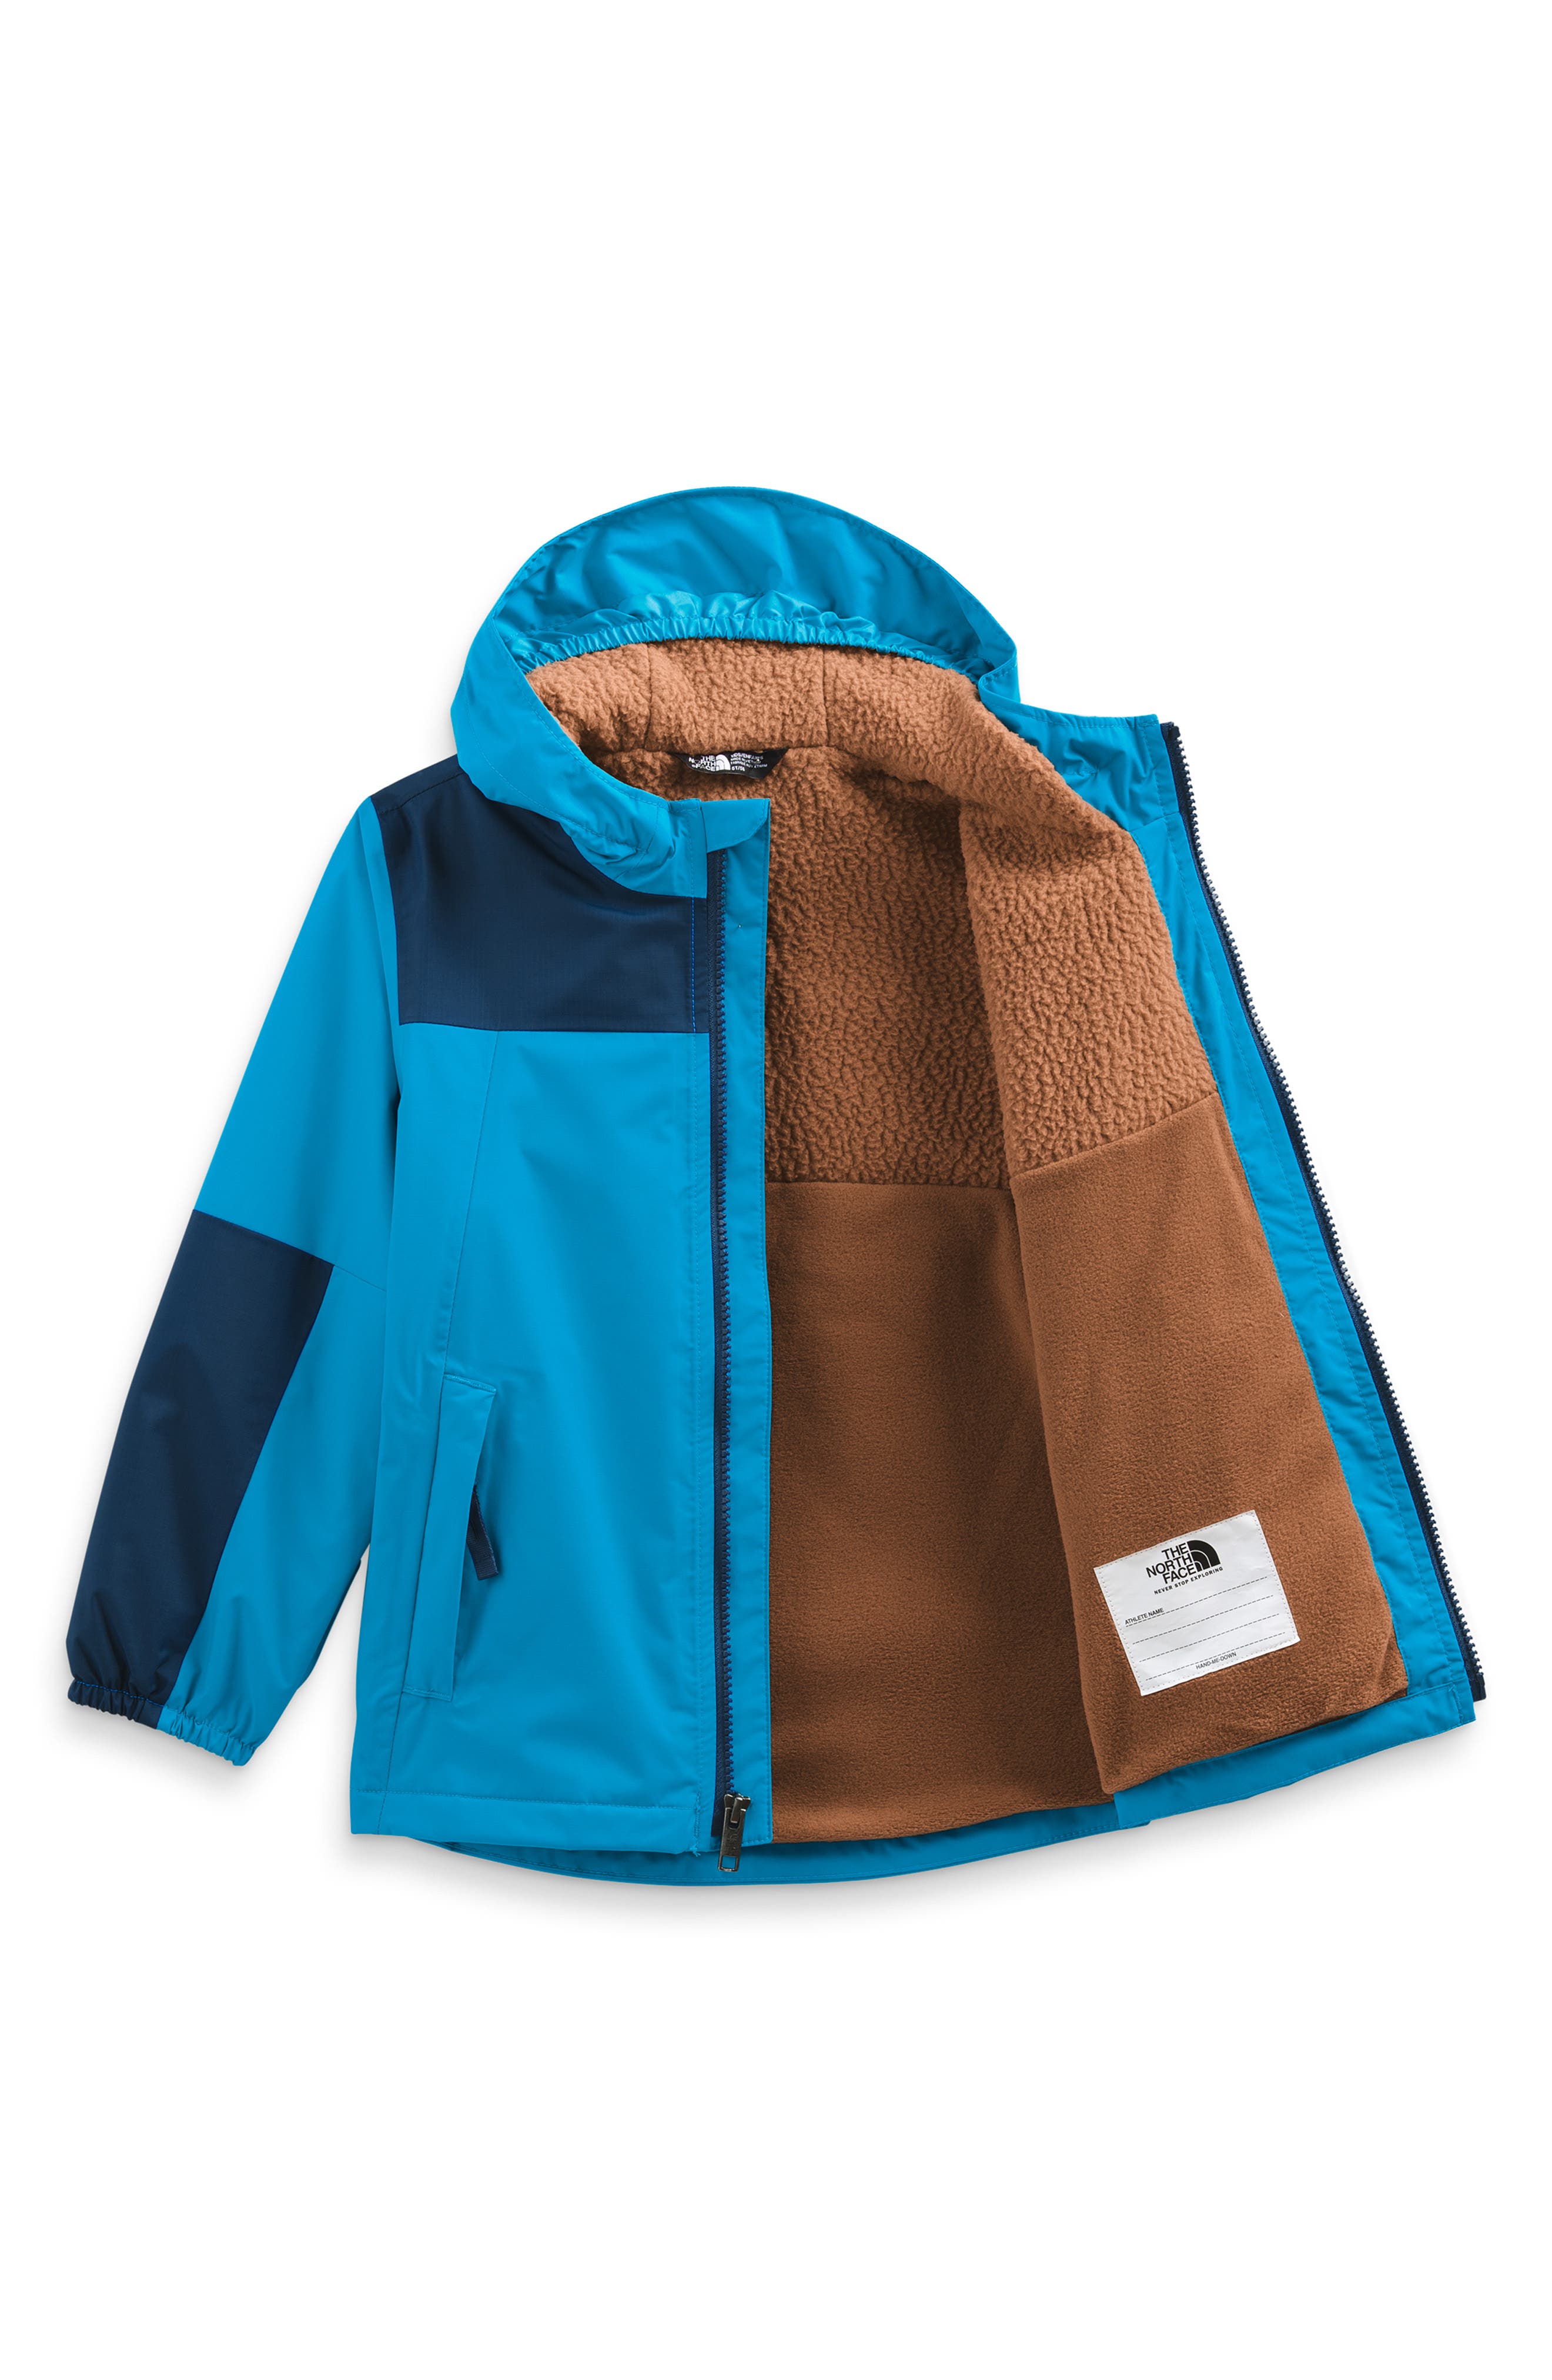 DressInn Boys Clothing Jackets Rainwear 32x5804 Rain Jacket Blue 12 Years Boy 